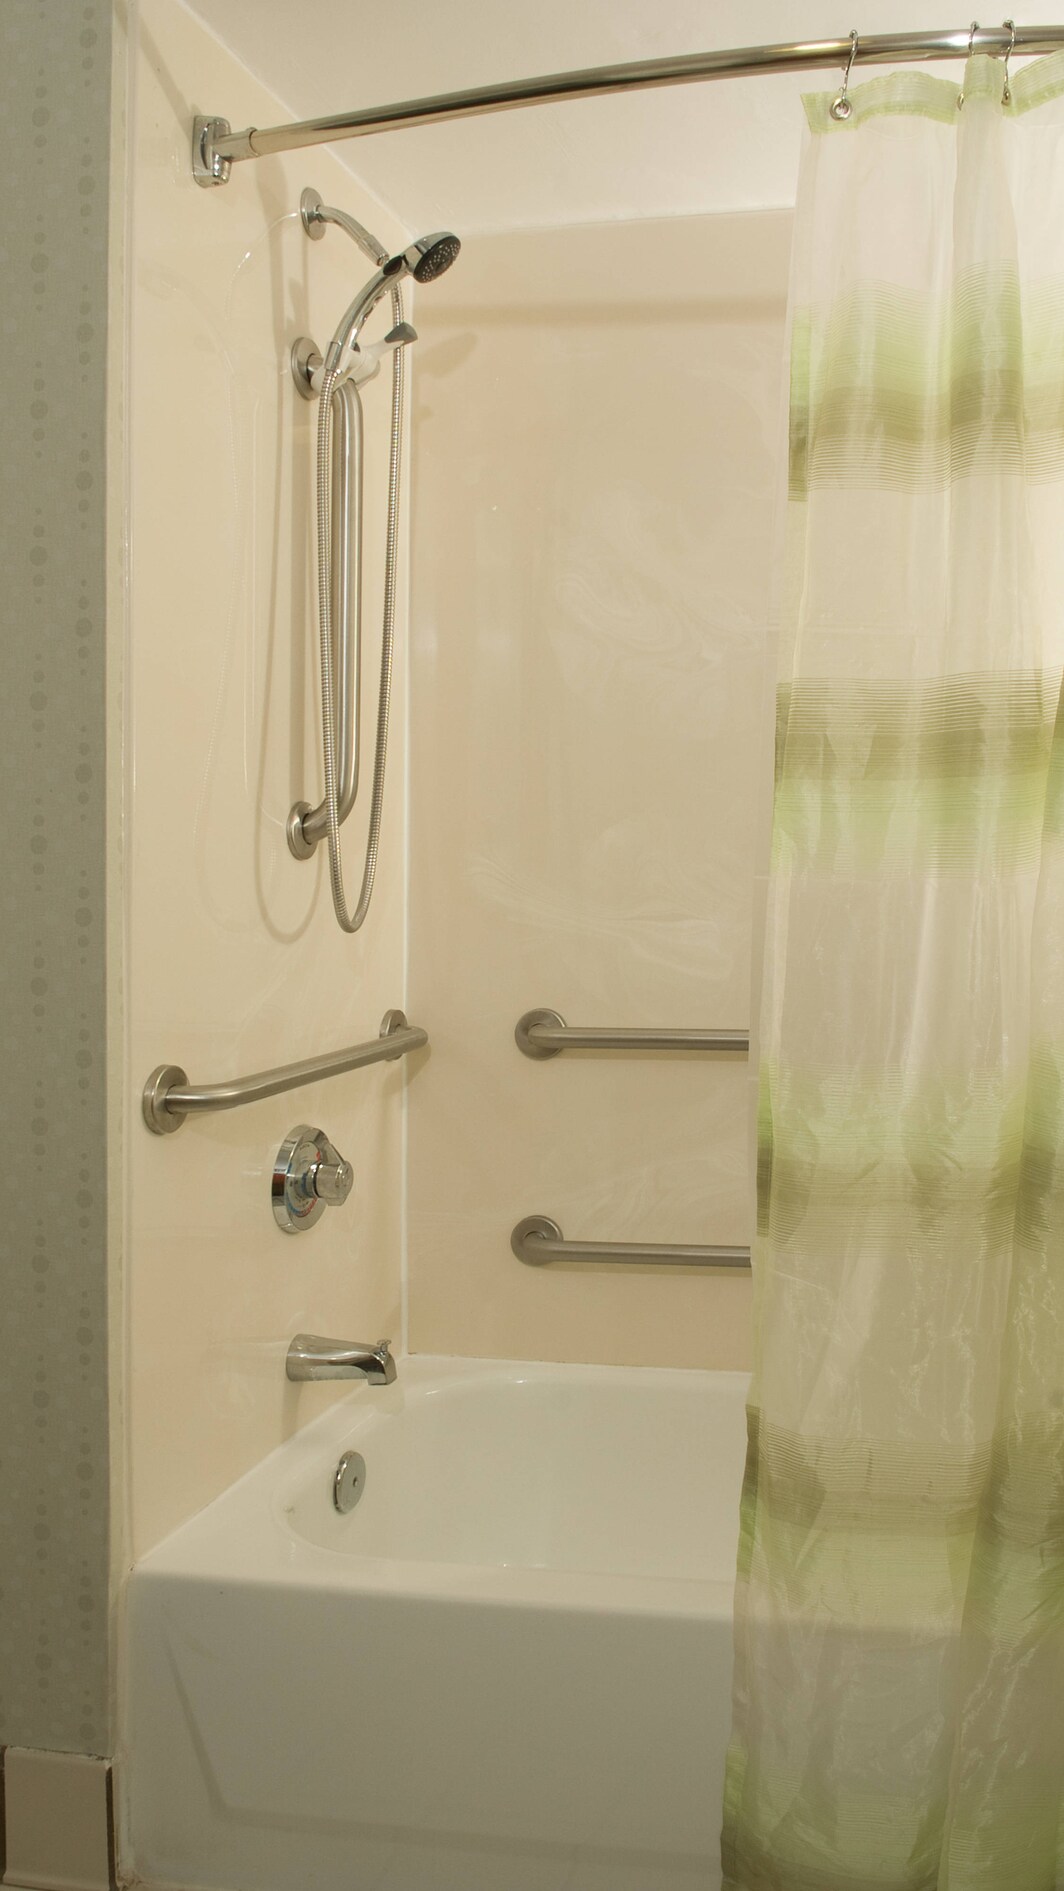 Accessible Bathroom – Shower & Tub